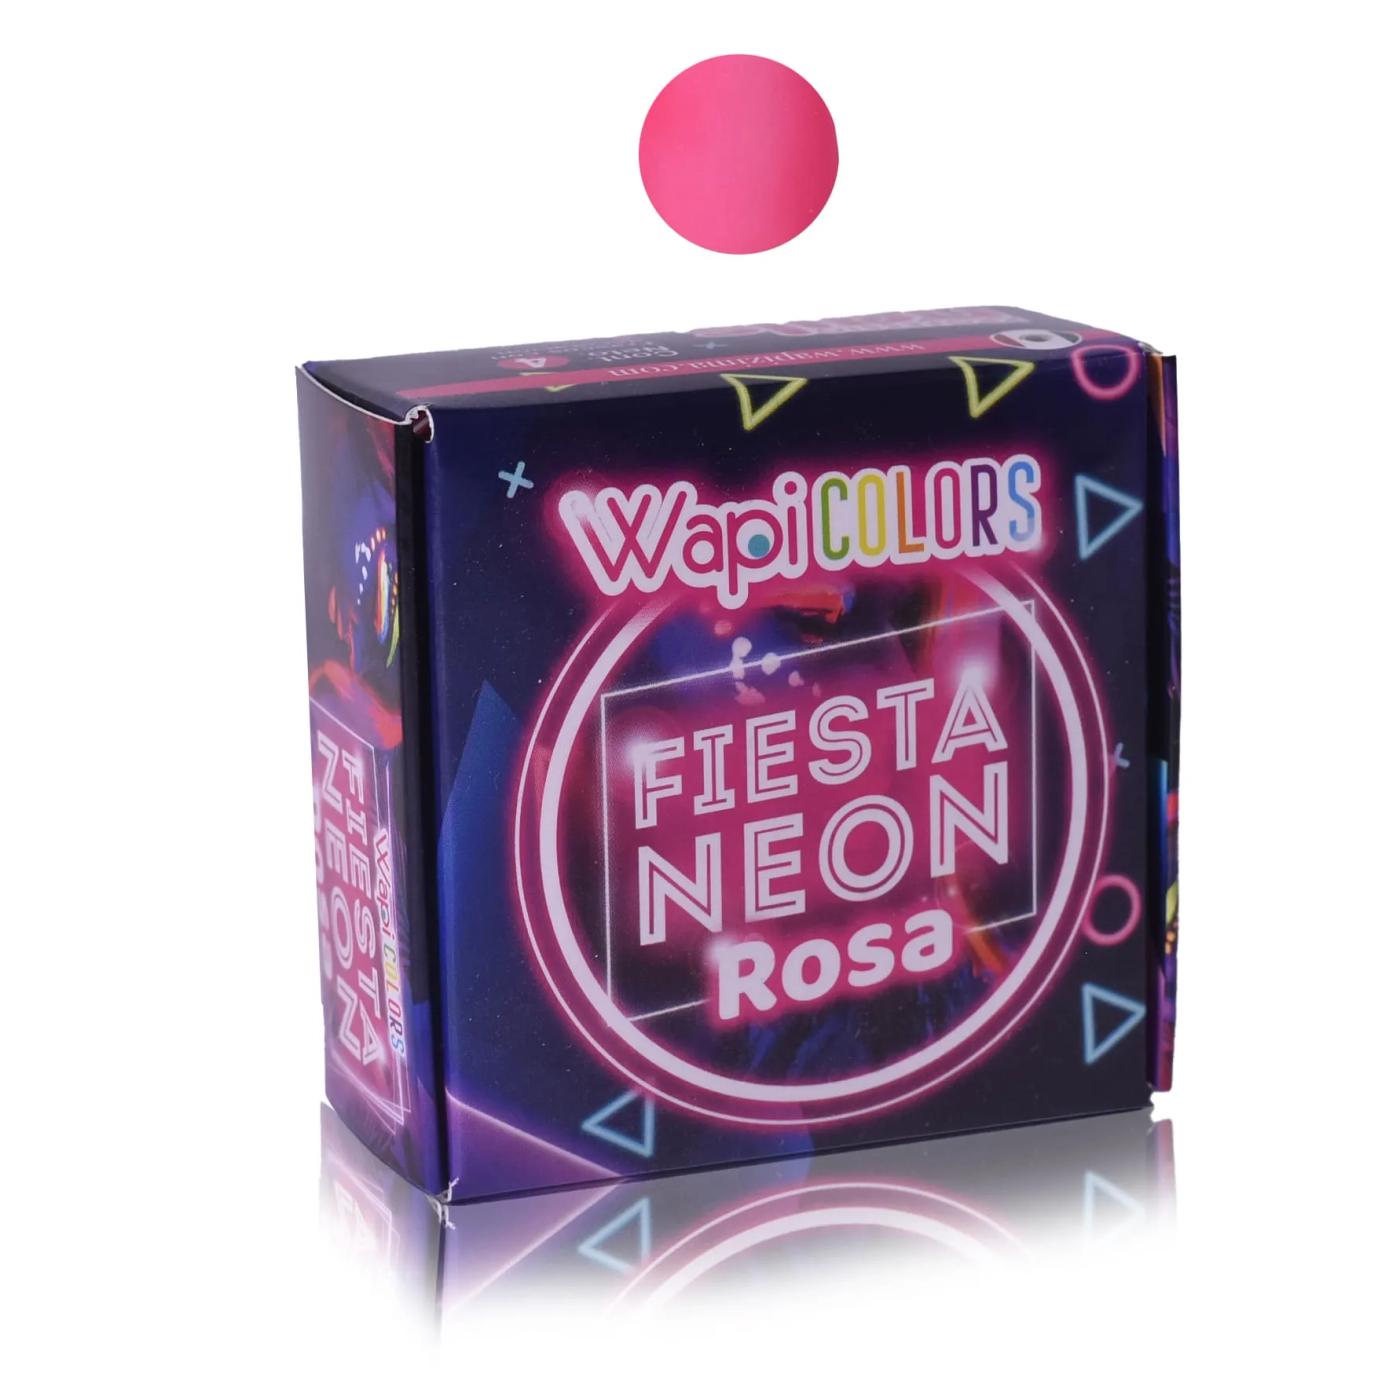 W.Wapicolors Fiesta Neon Rosa